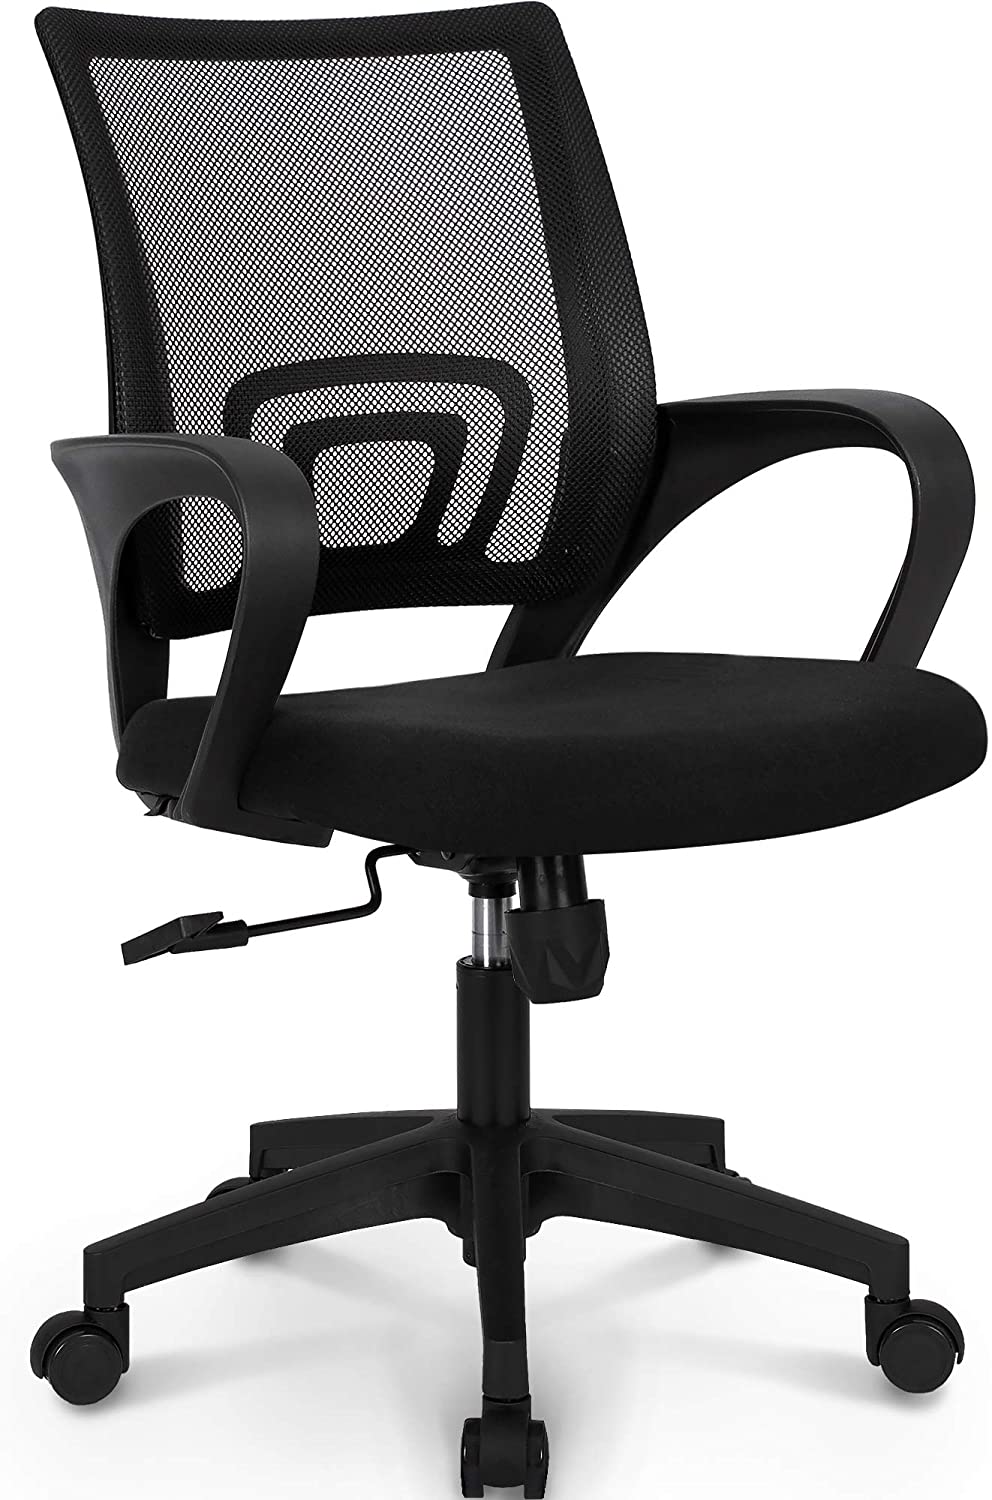 Gaming Chair Computer Racing Swivel Seat Office Chair w/ Lumbar